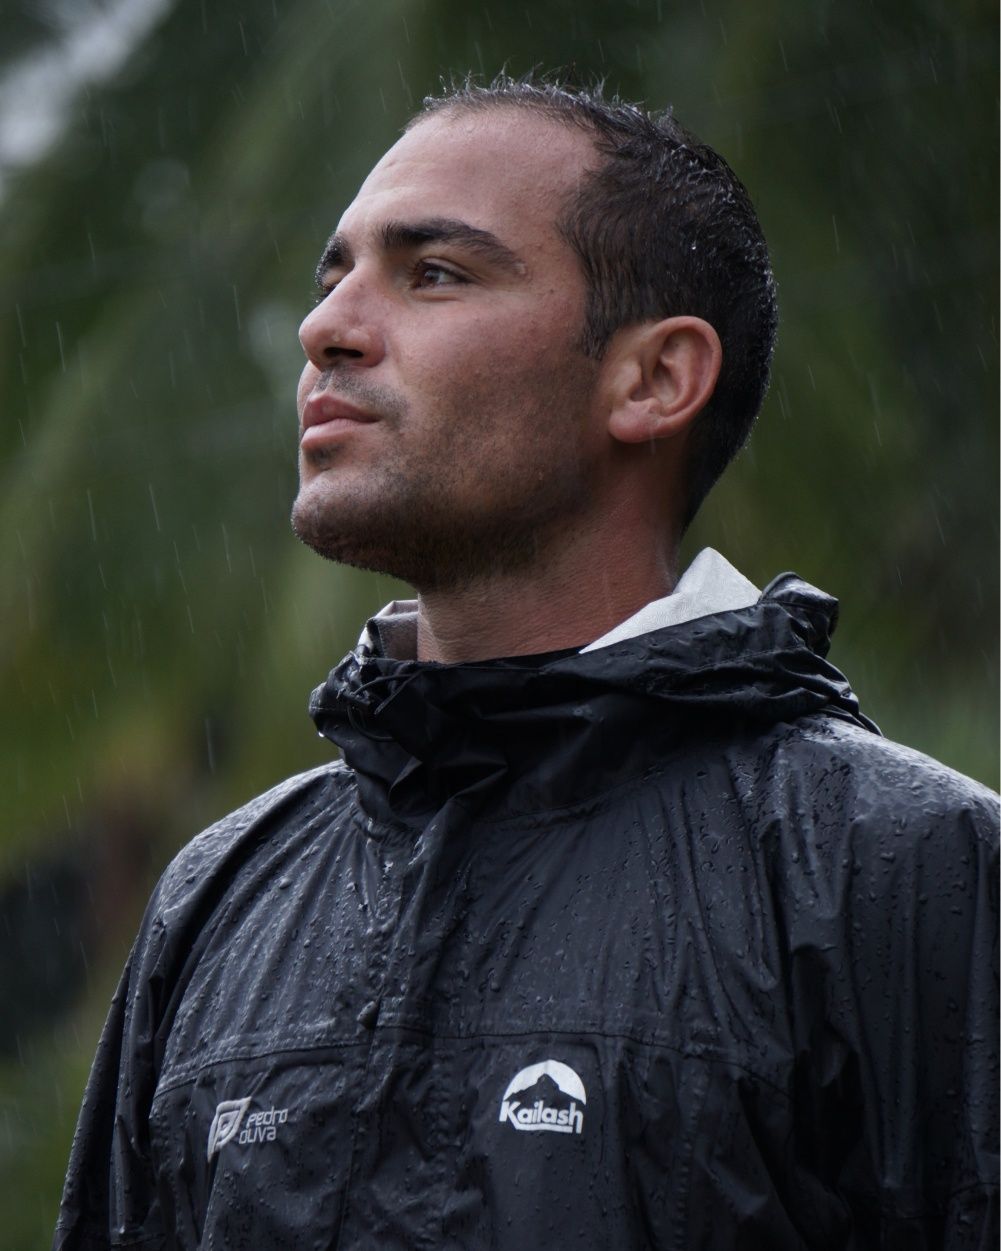 A close up image of Pedro Oliva wearing a black jacket.